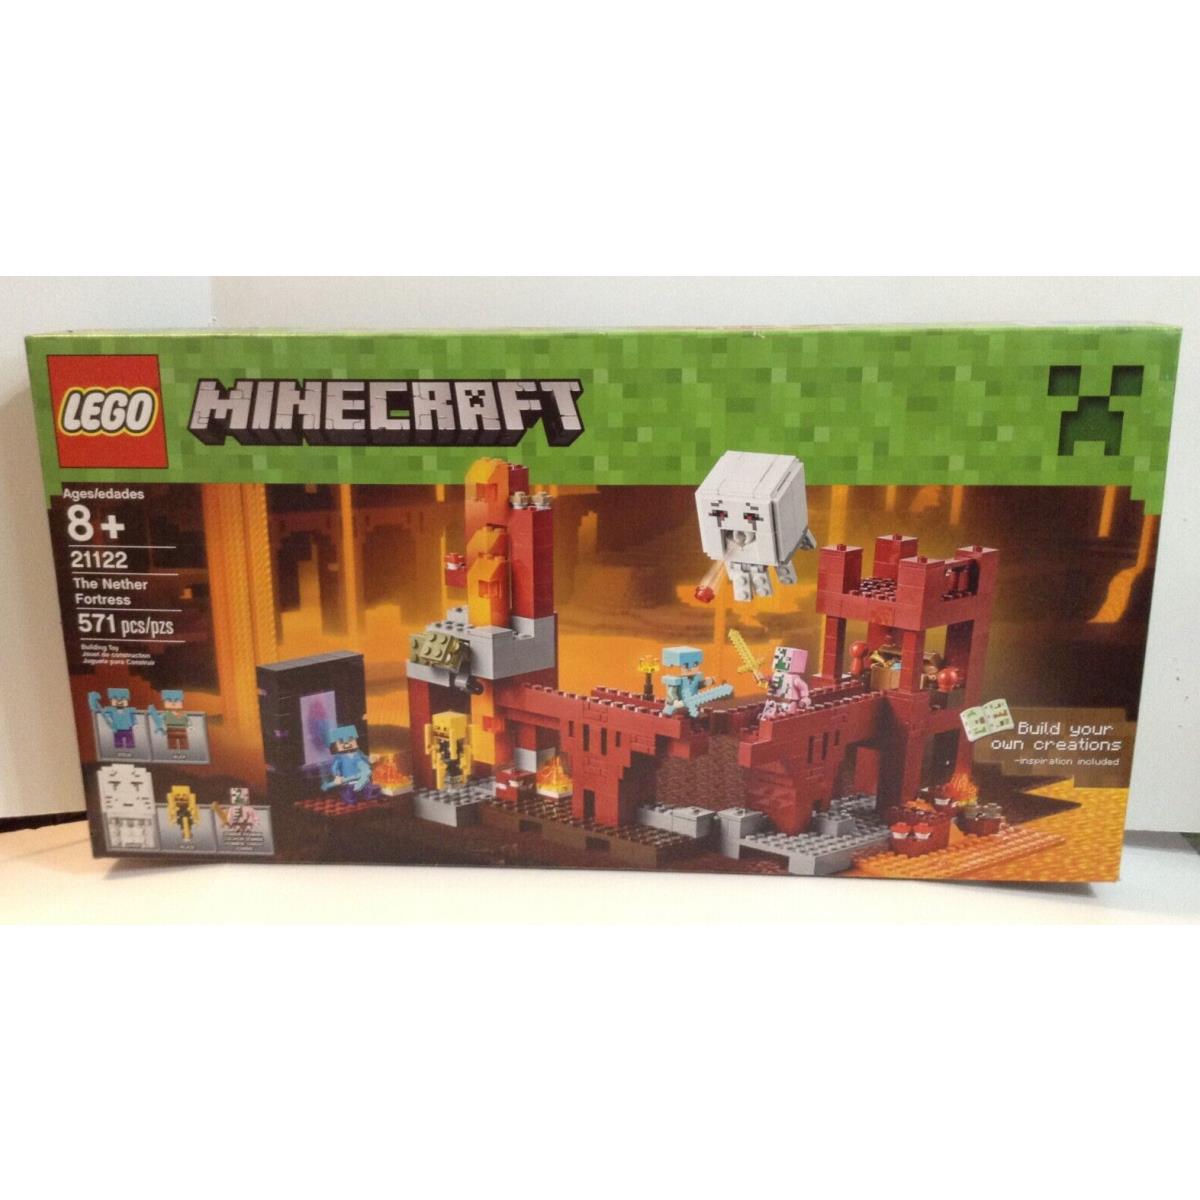 Lego Minecraft 21122 The Nether Fortress From 2015 Ghast Blaze Zombie Pigman